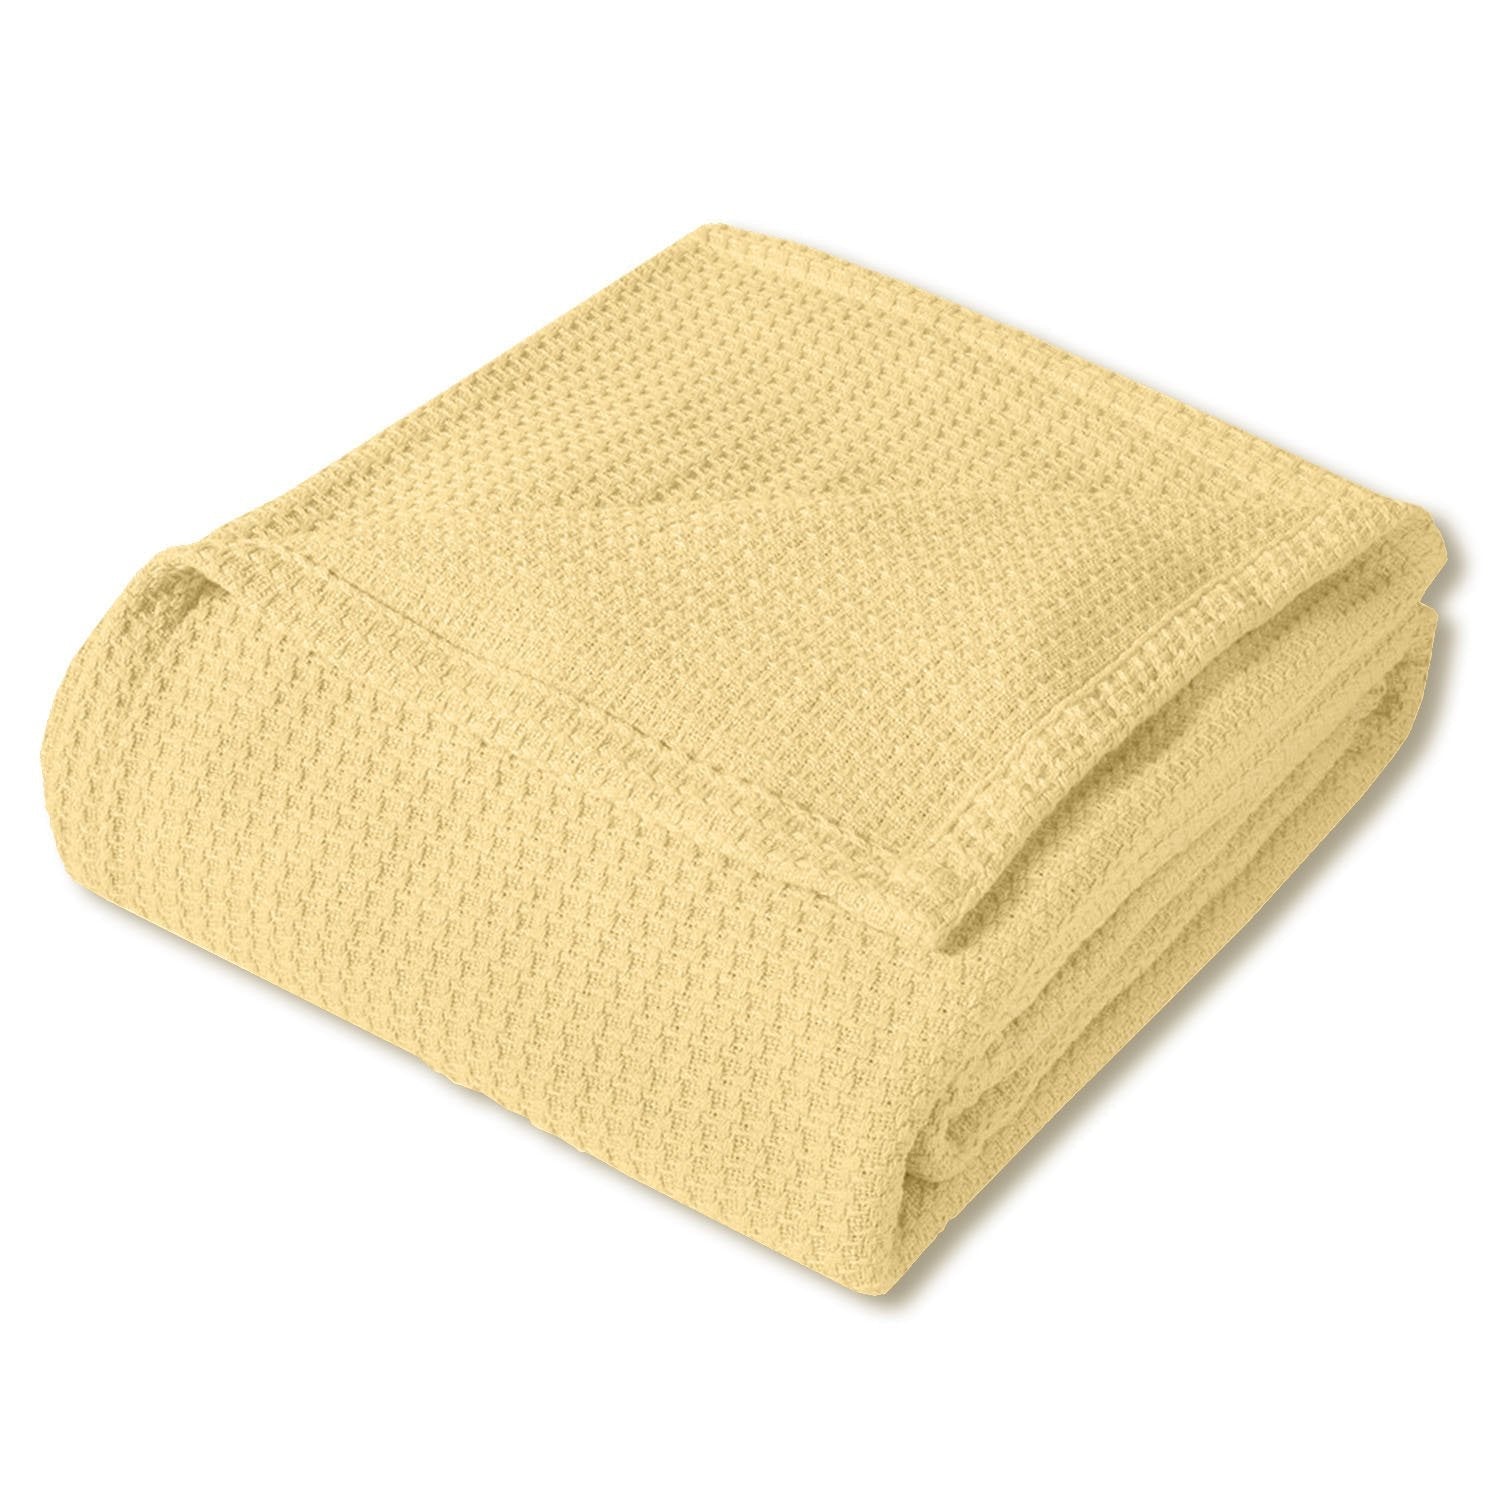 Basket Weave Cotton Blanket Yellow - Folded